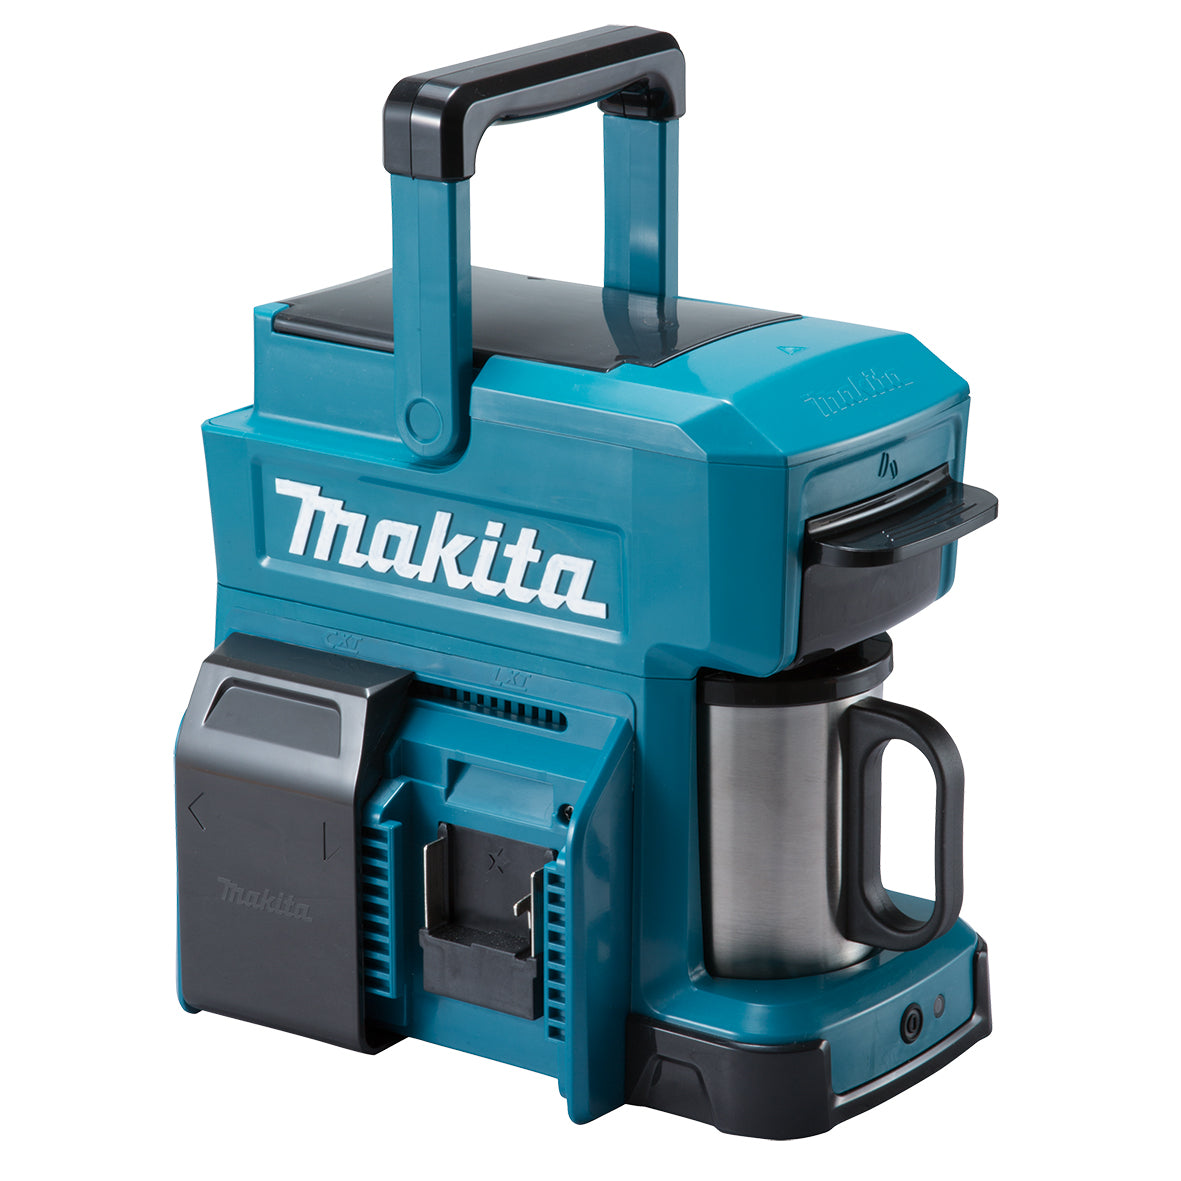 12V Max - 18V Mobile Bare (Tool Only) Coffee Maker DCM501Z by Makita